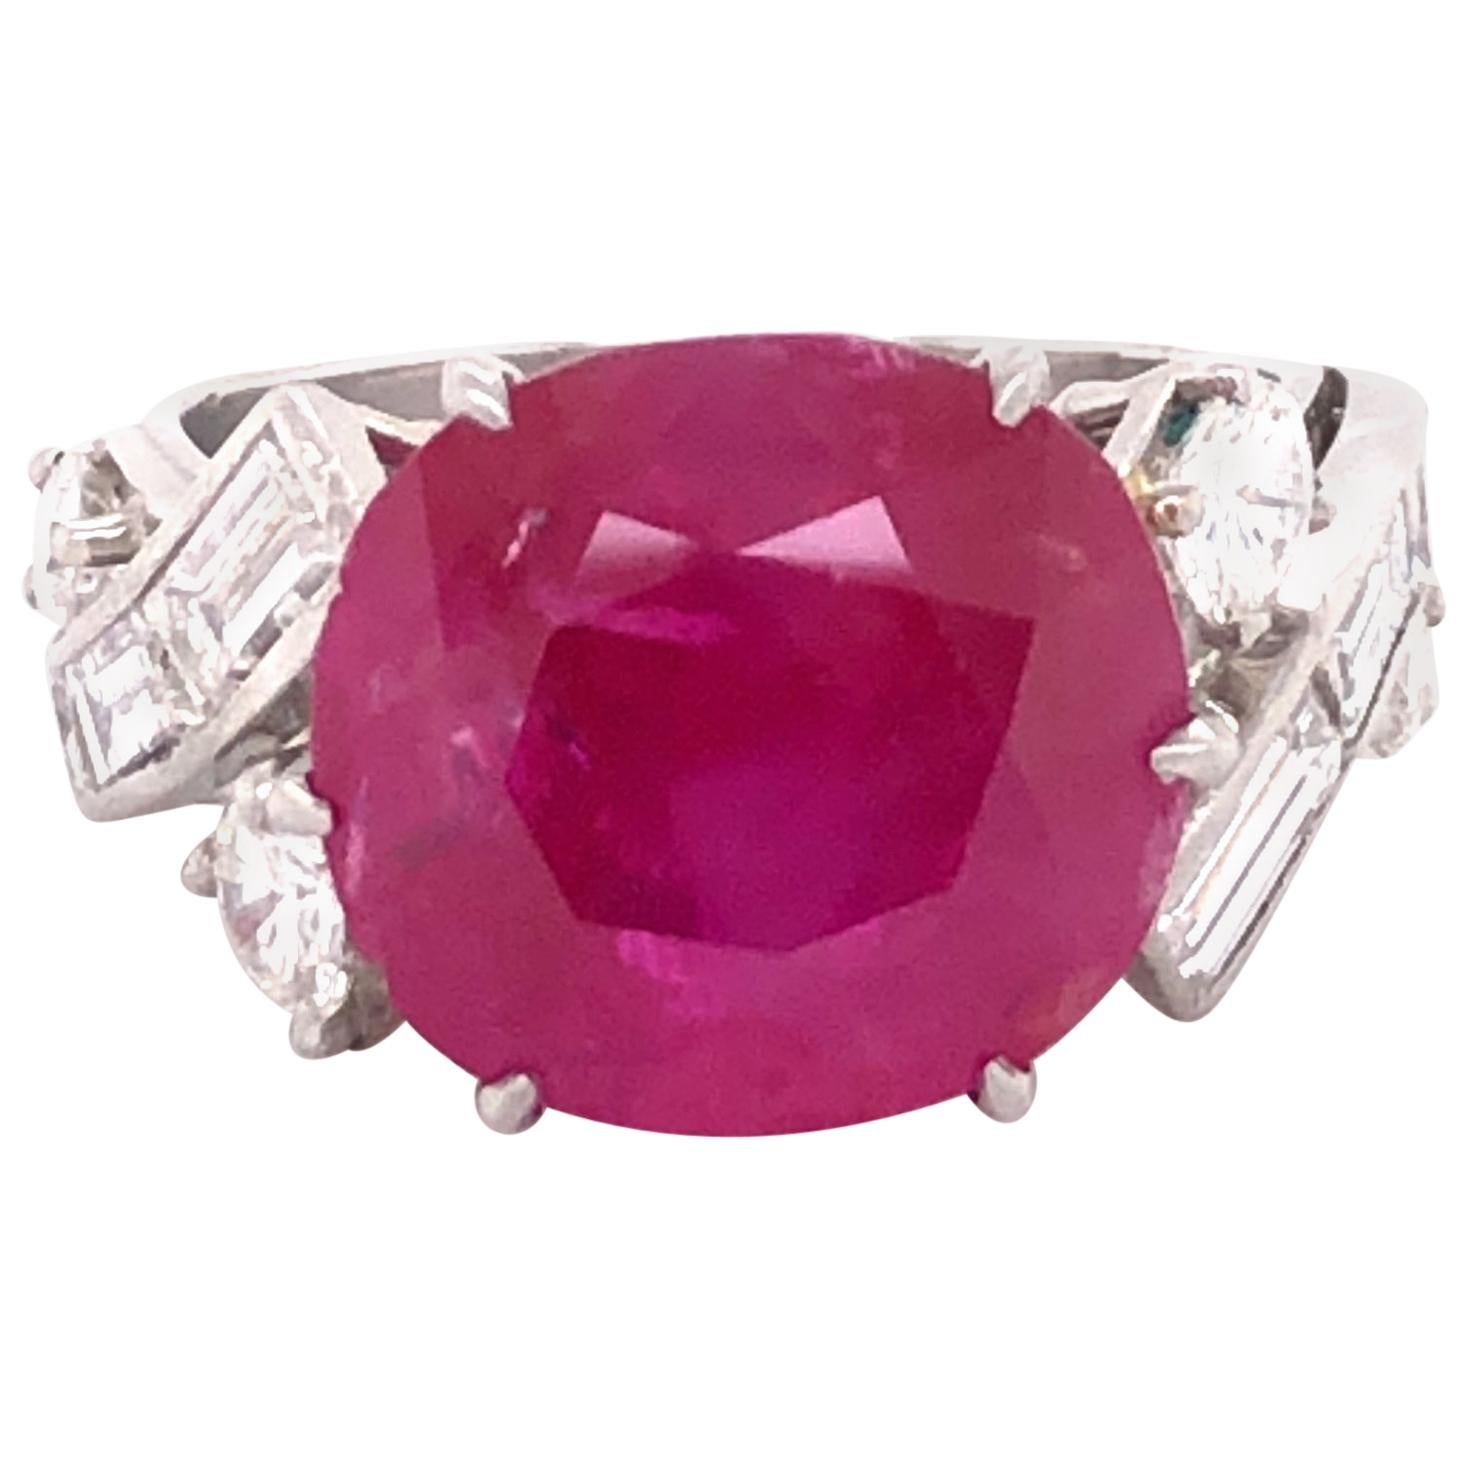 Stunning 10.40 Carat Burma Ruby and Diamond Ring in Platinum 950